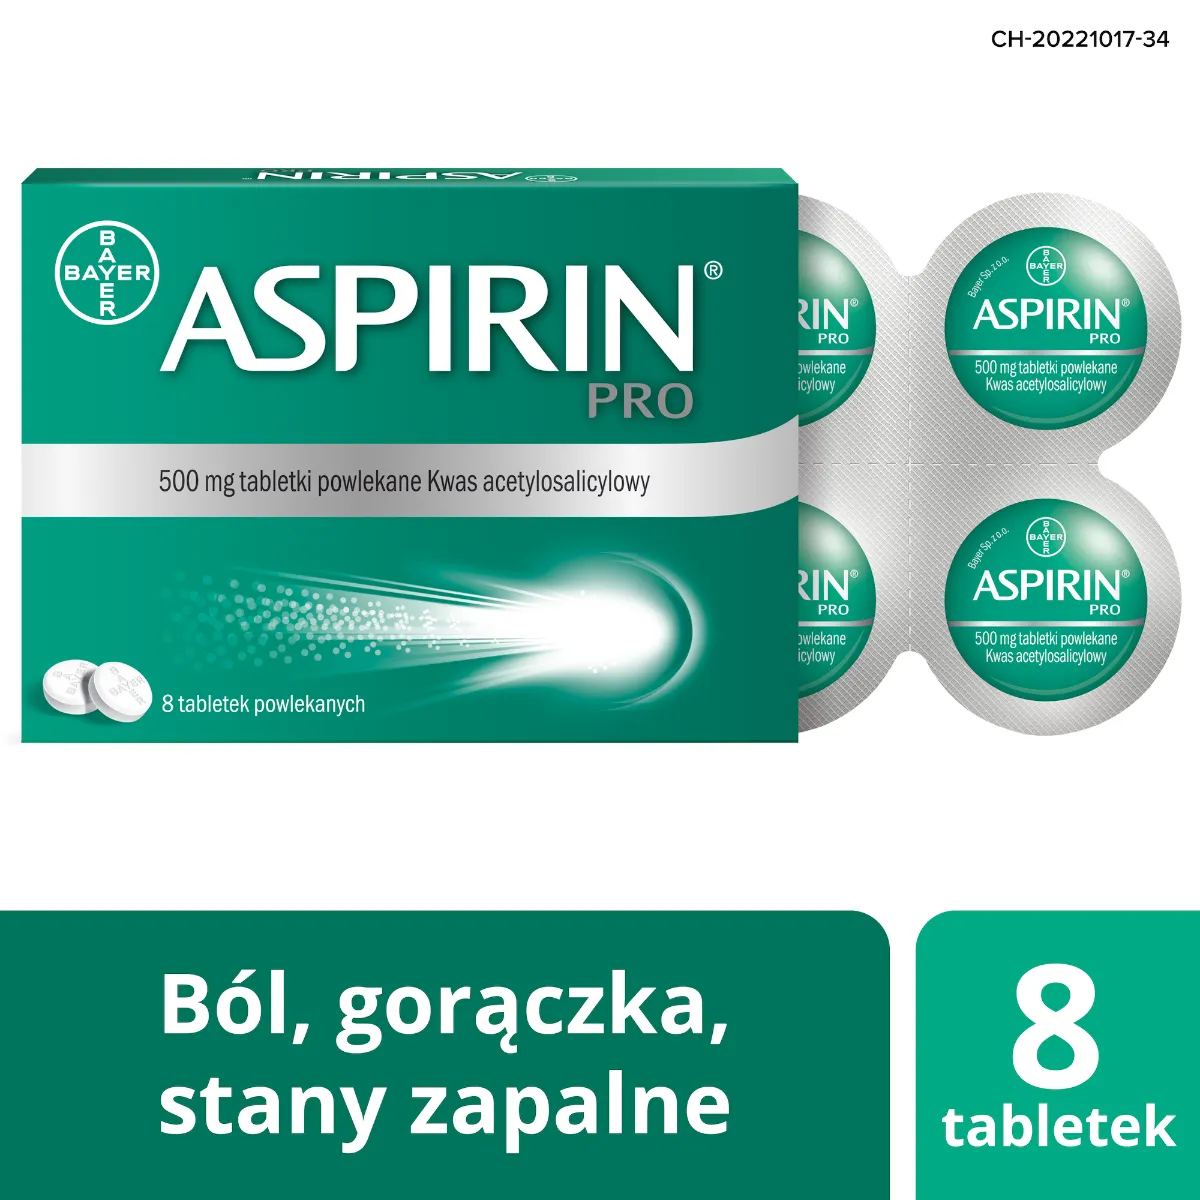 Aspirin Pro, 500 mg, 8 tabletek powlekanych